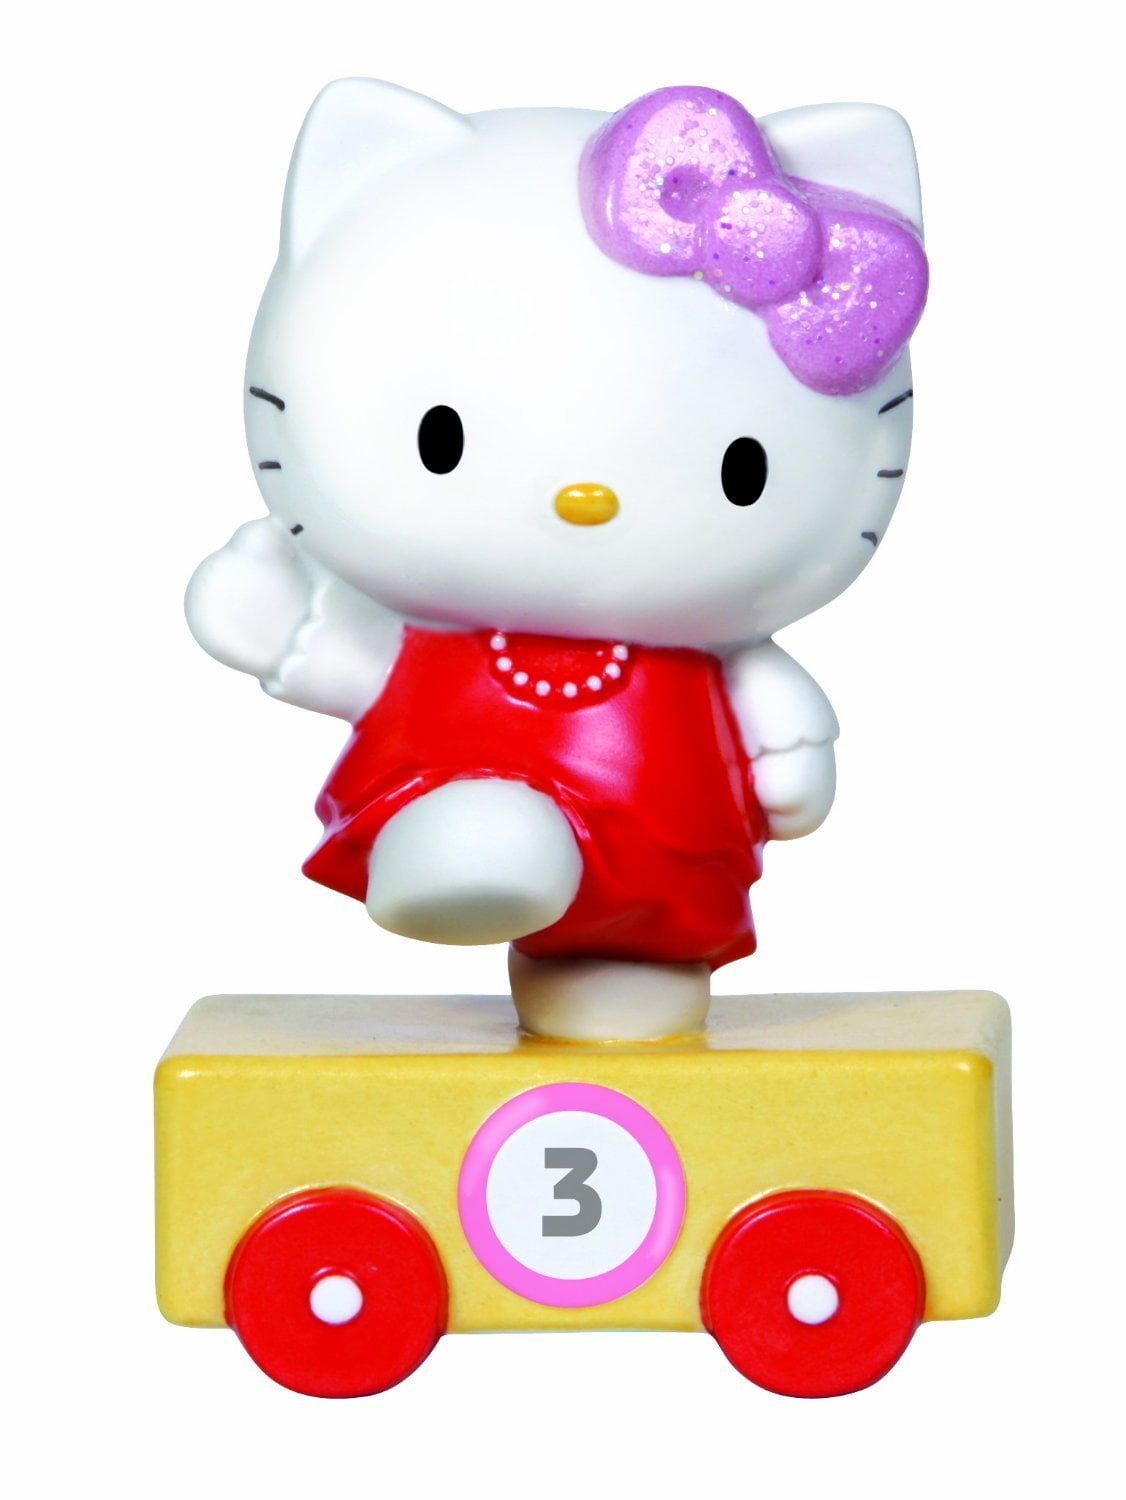 It's the 30-year milestone for Hello Kitty - Nov. 19, 2003